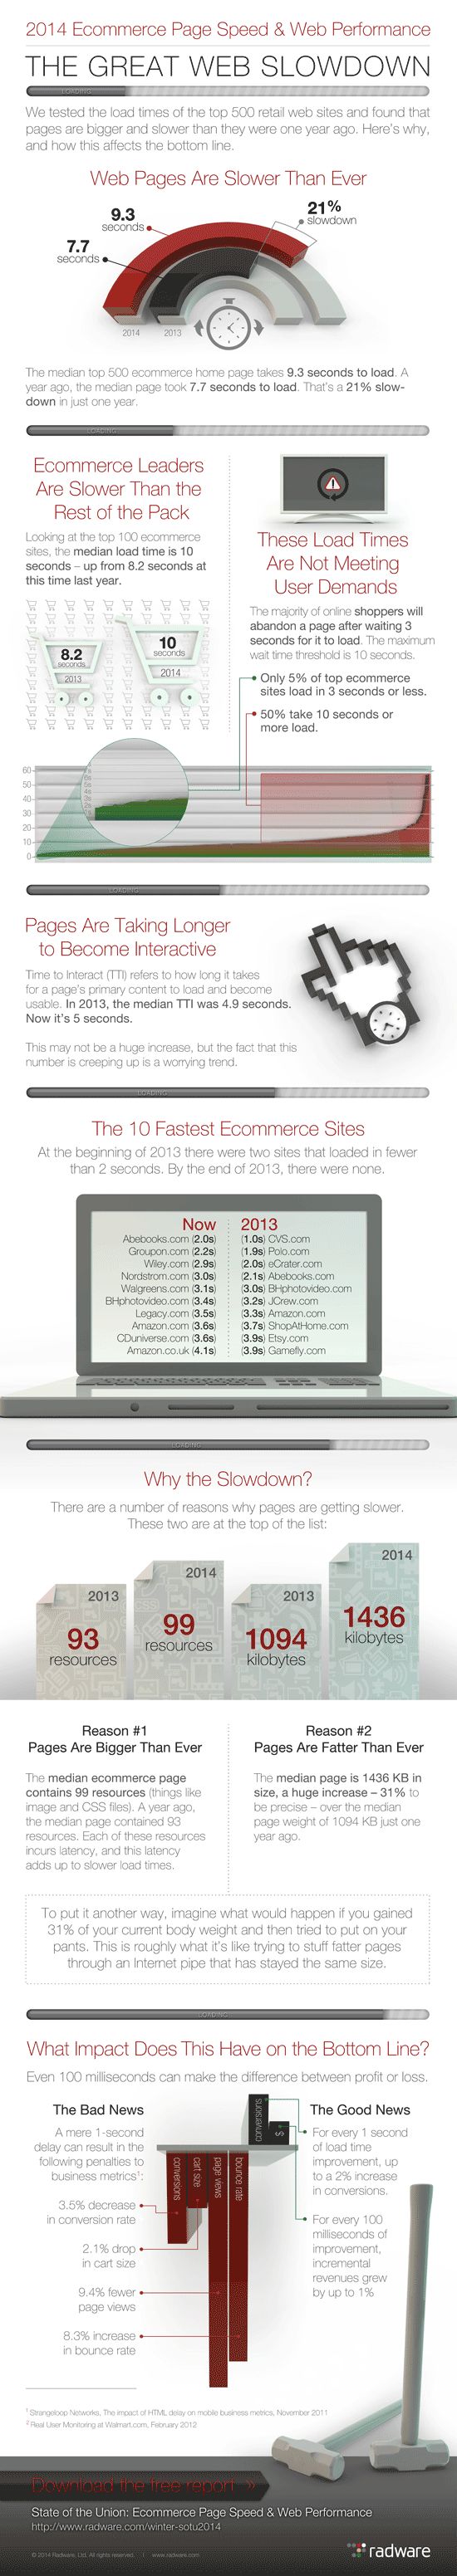 web-slowdown